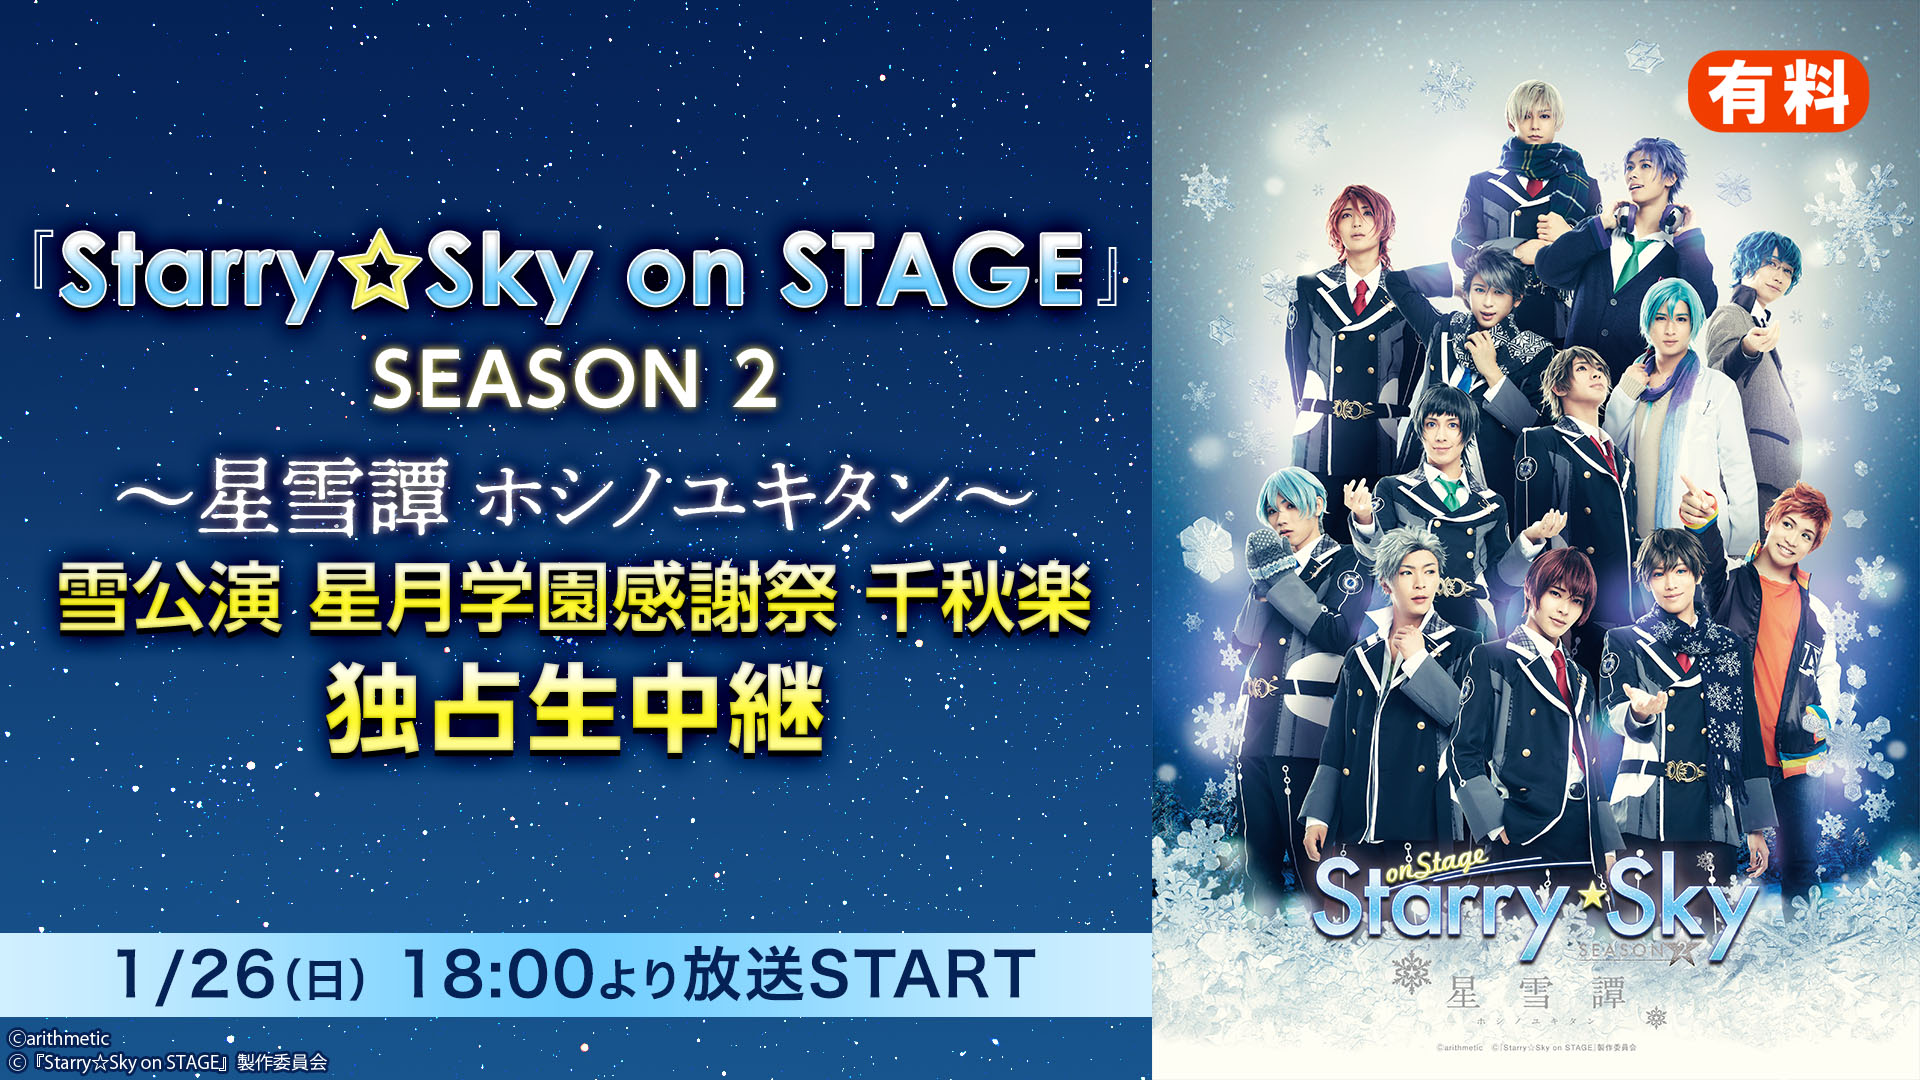 『Starry Sky on STAGE』 SEASON 2 ～星雪譚 ホシノユキタン〜